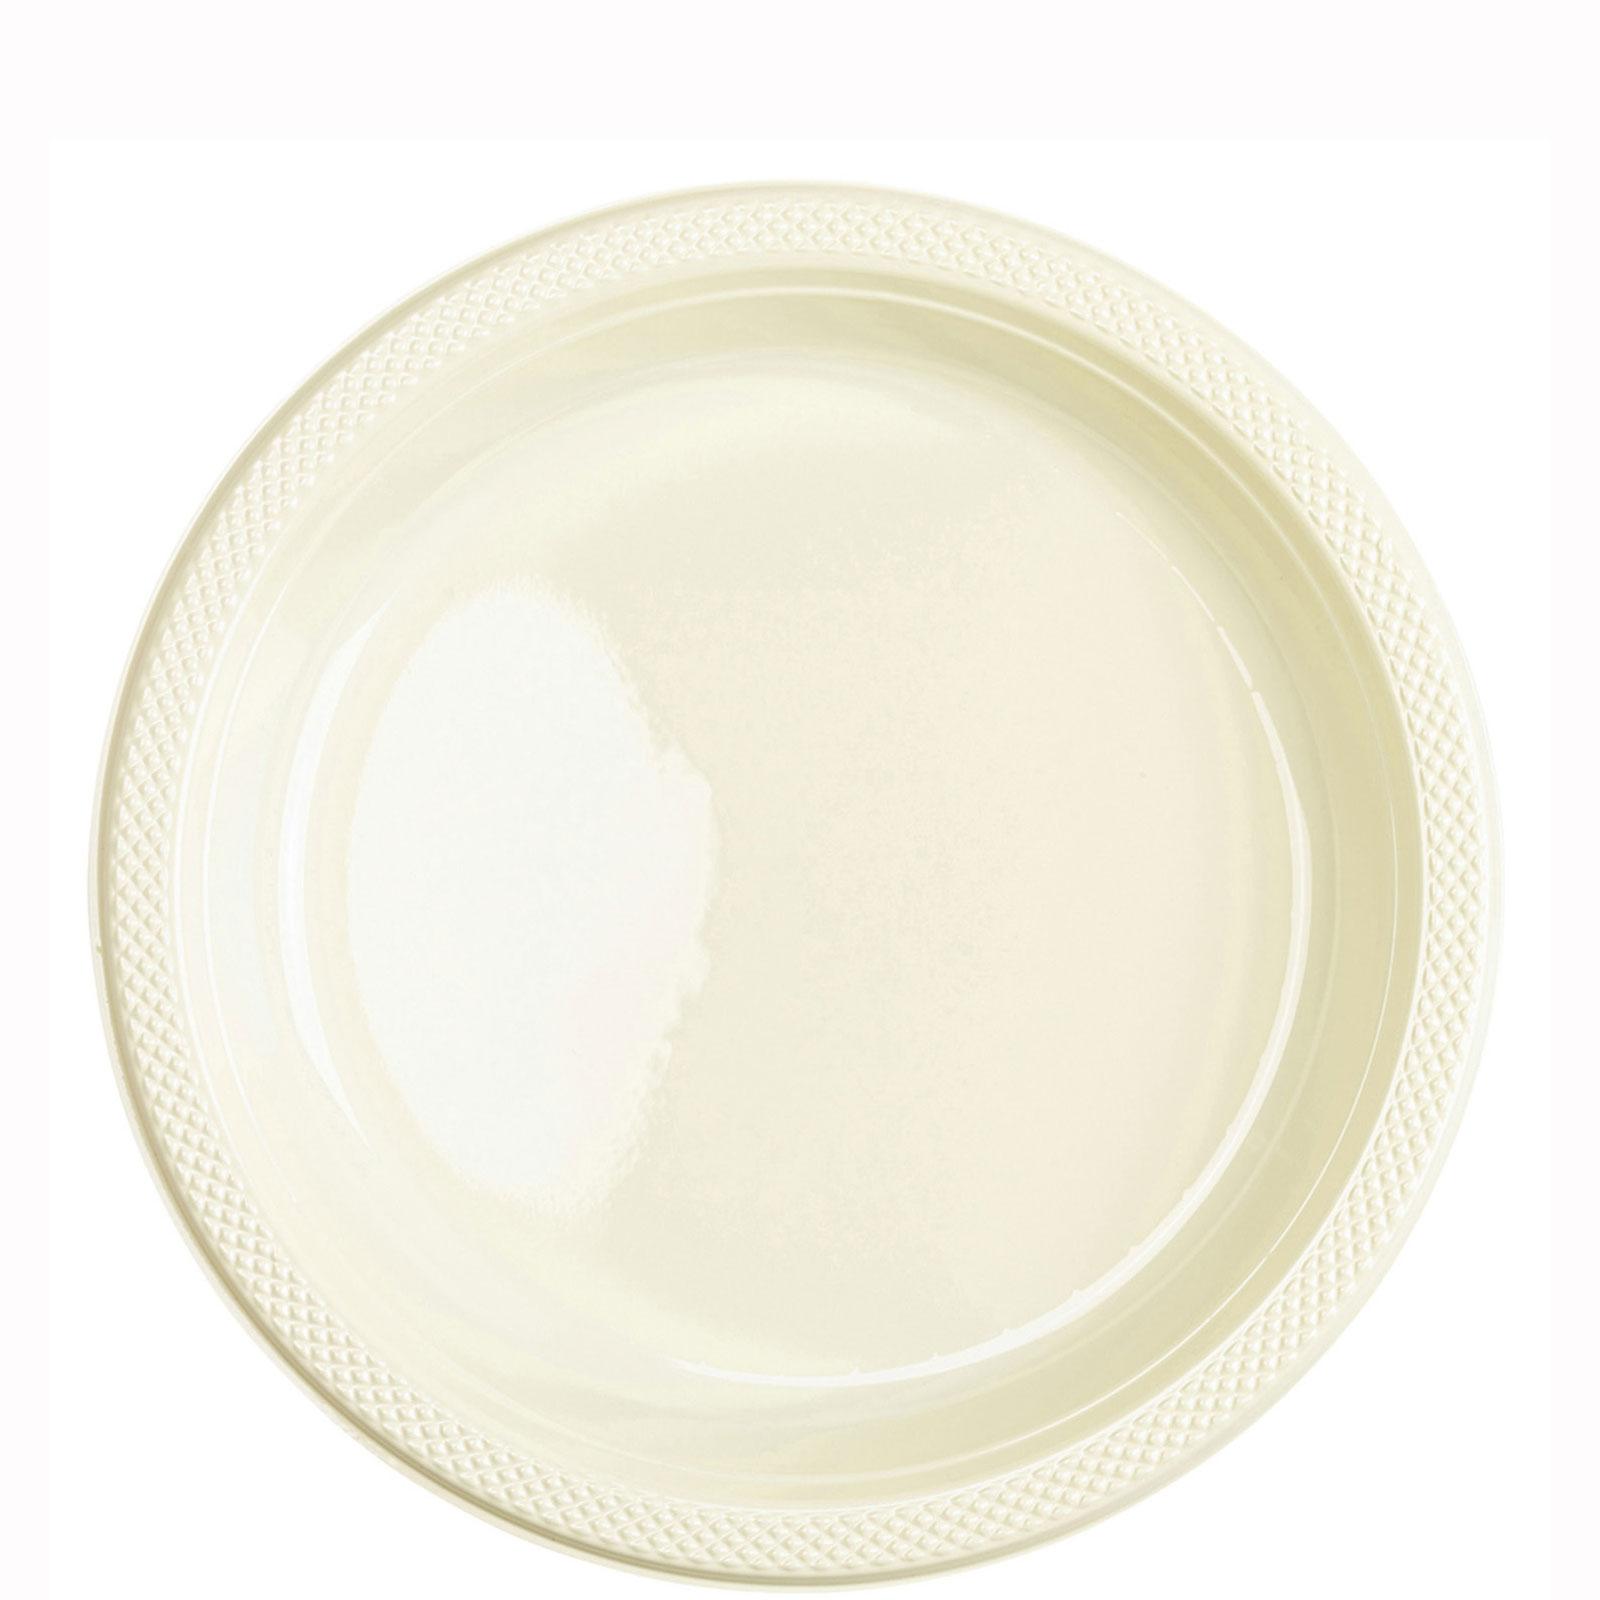 Vanilla Creme Plastic Plates 9in, 20pcs Solid Tableware - Party Centre